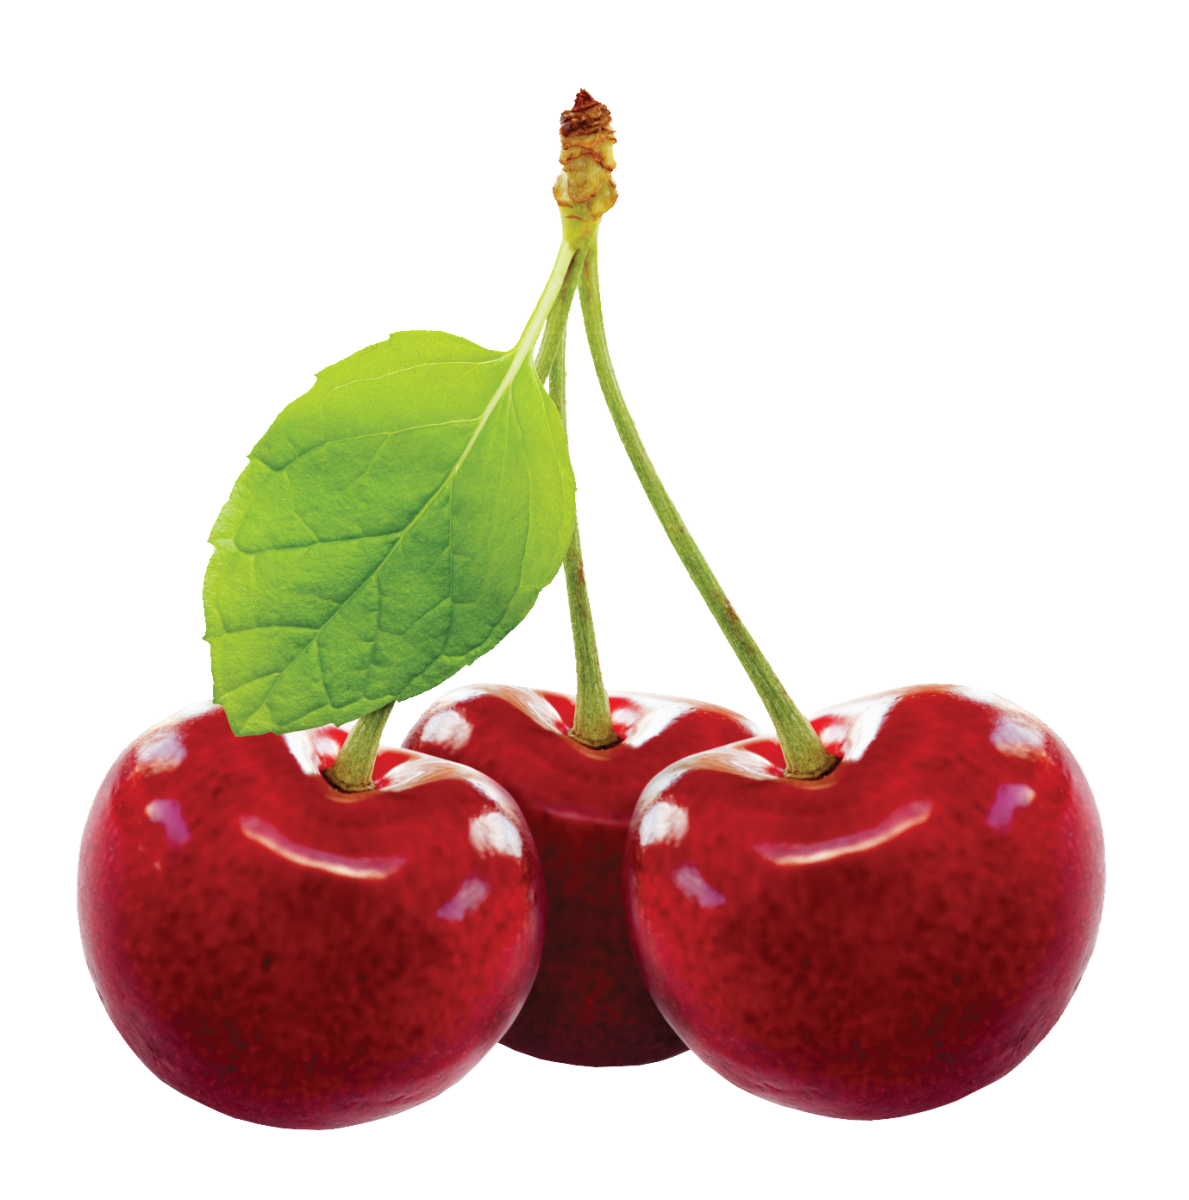 download cherry fruit image png image pngimg #24499